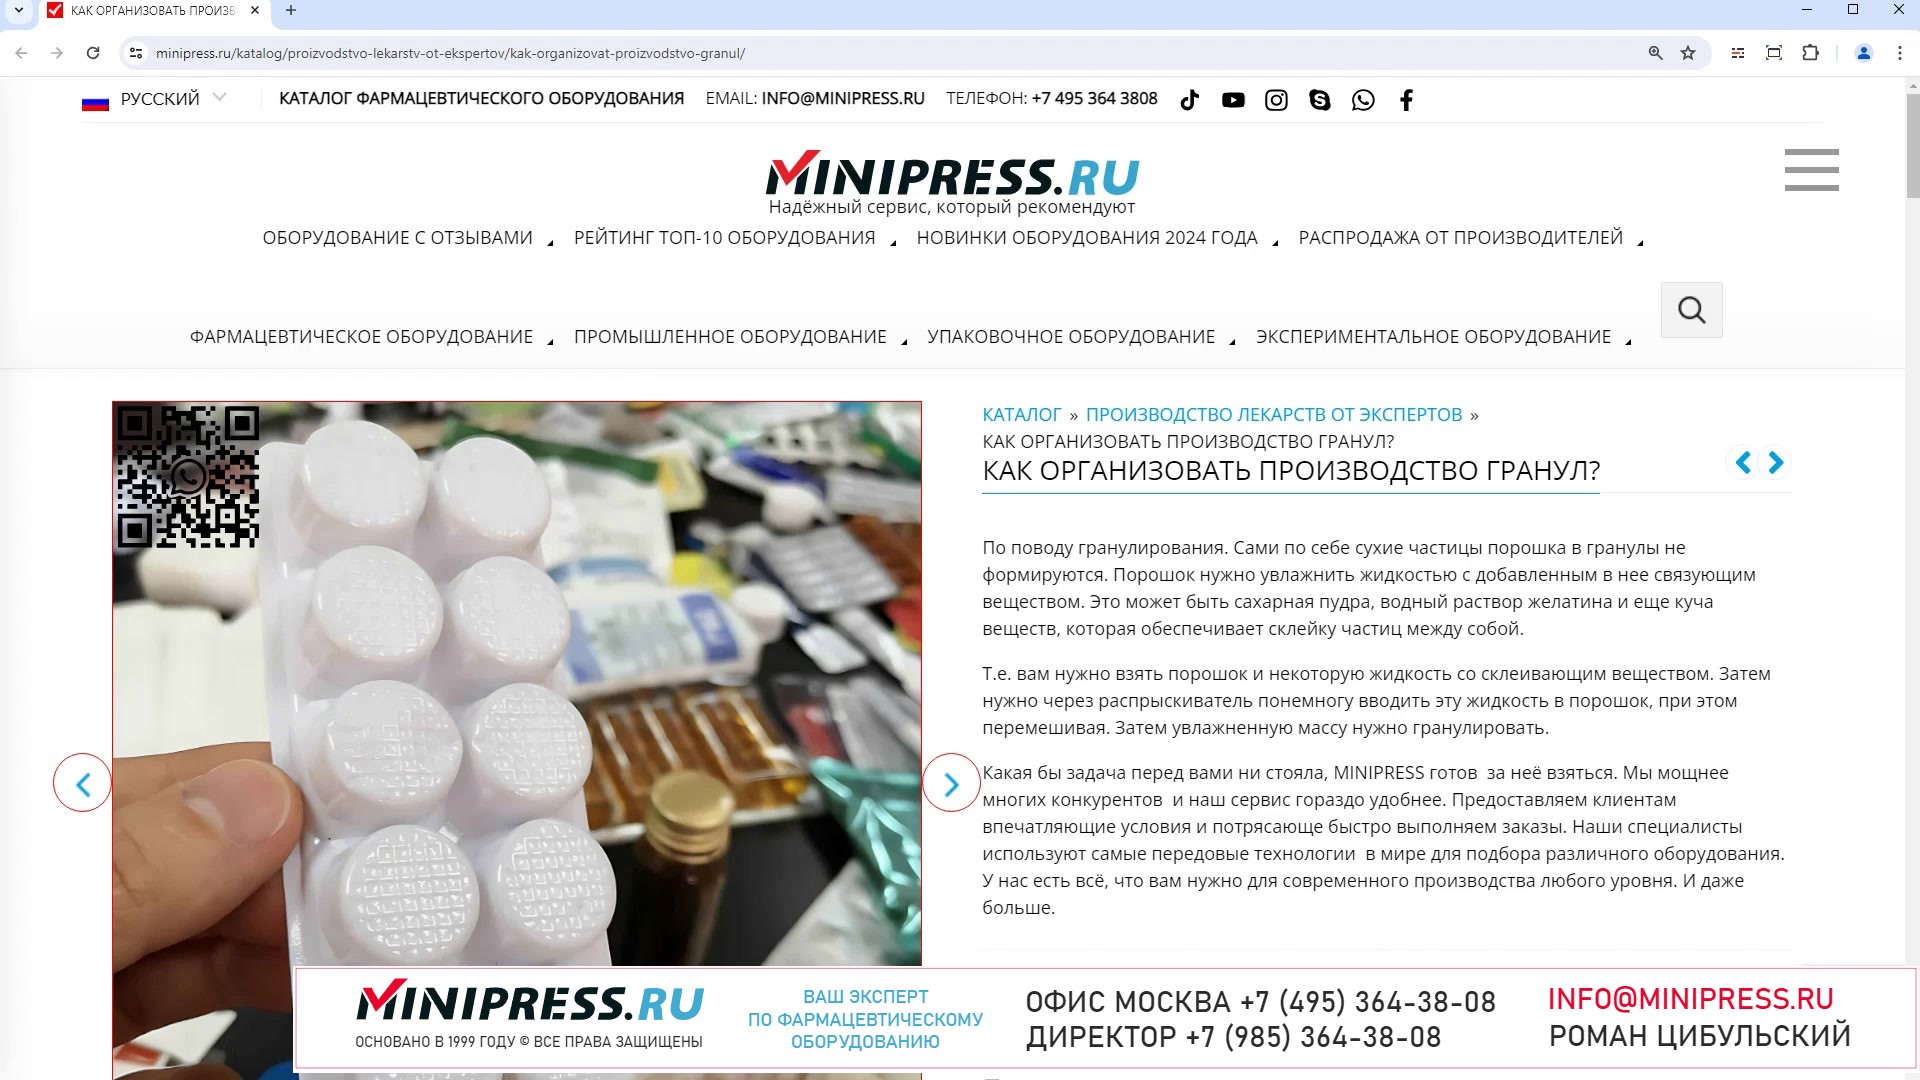 Minipress.ru Как организовать производство гранул